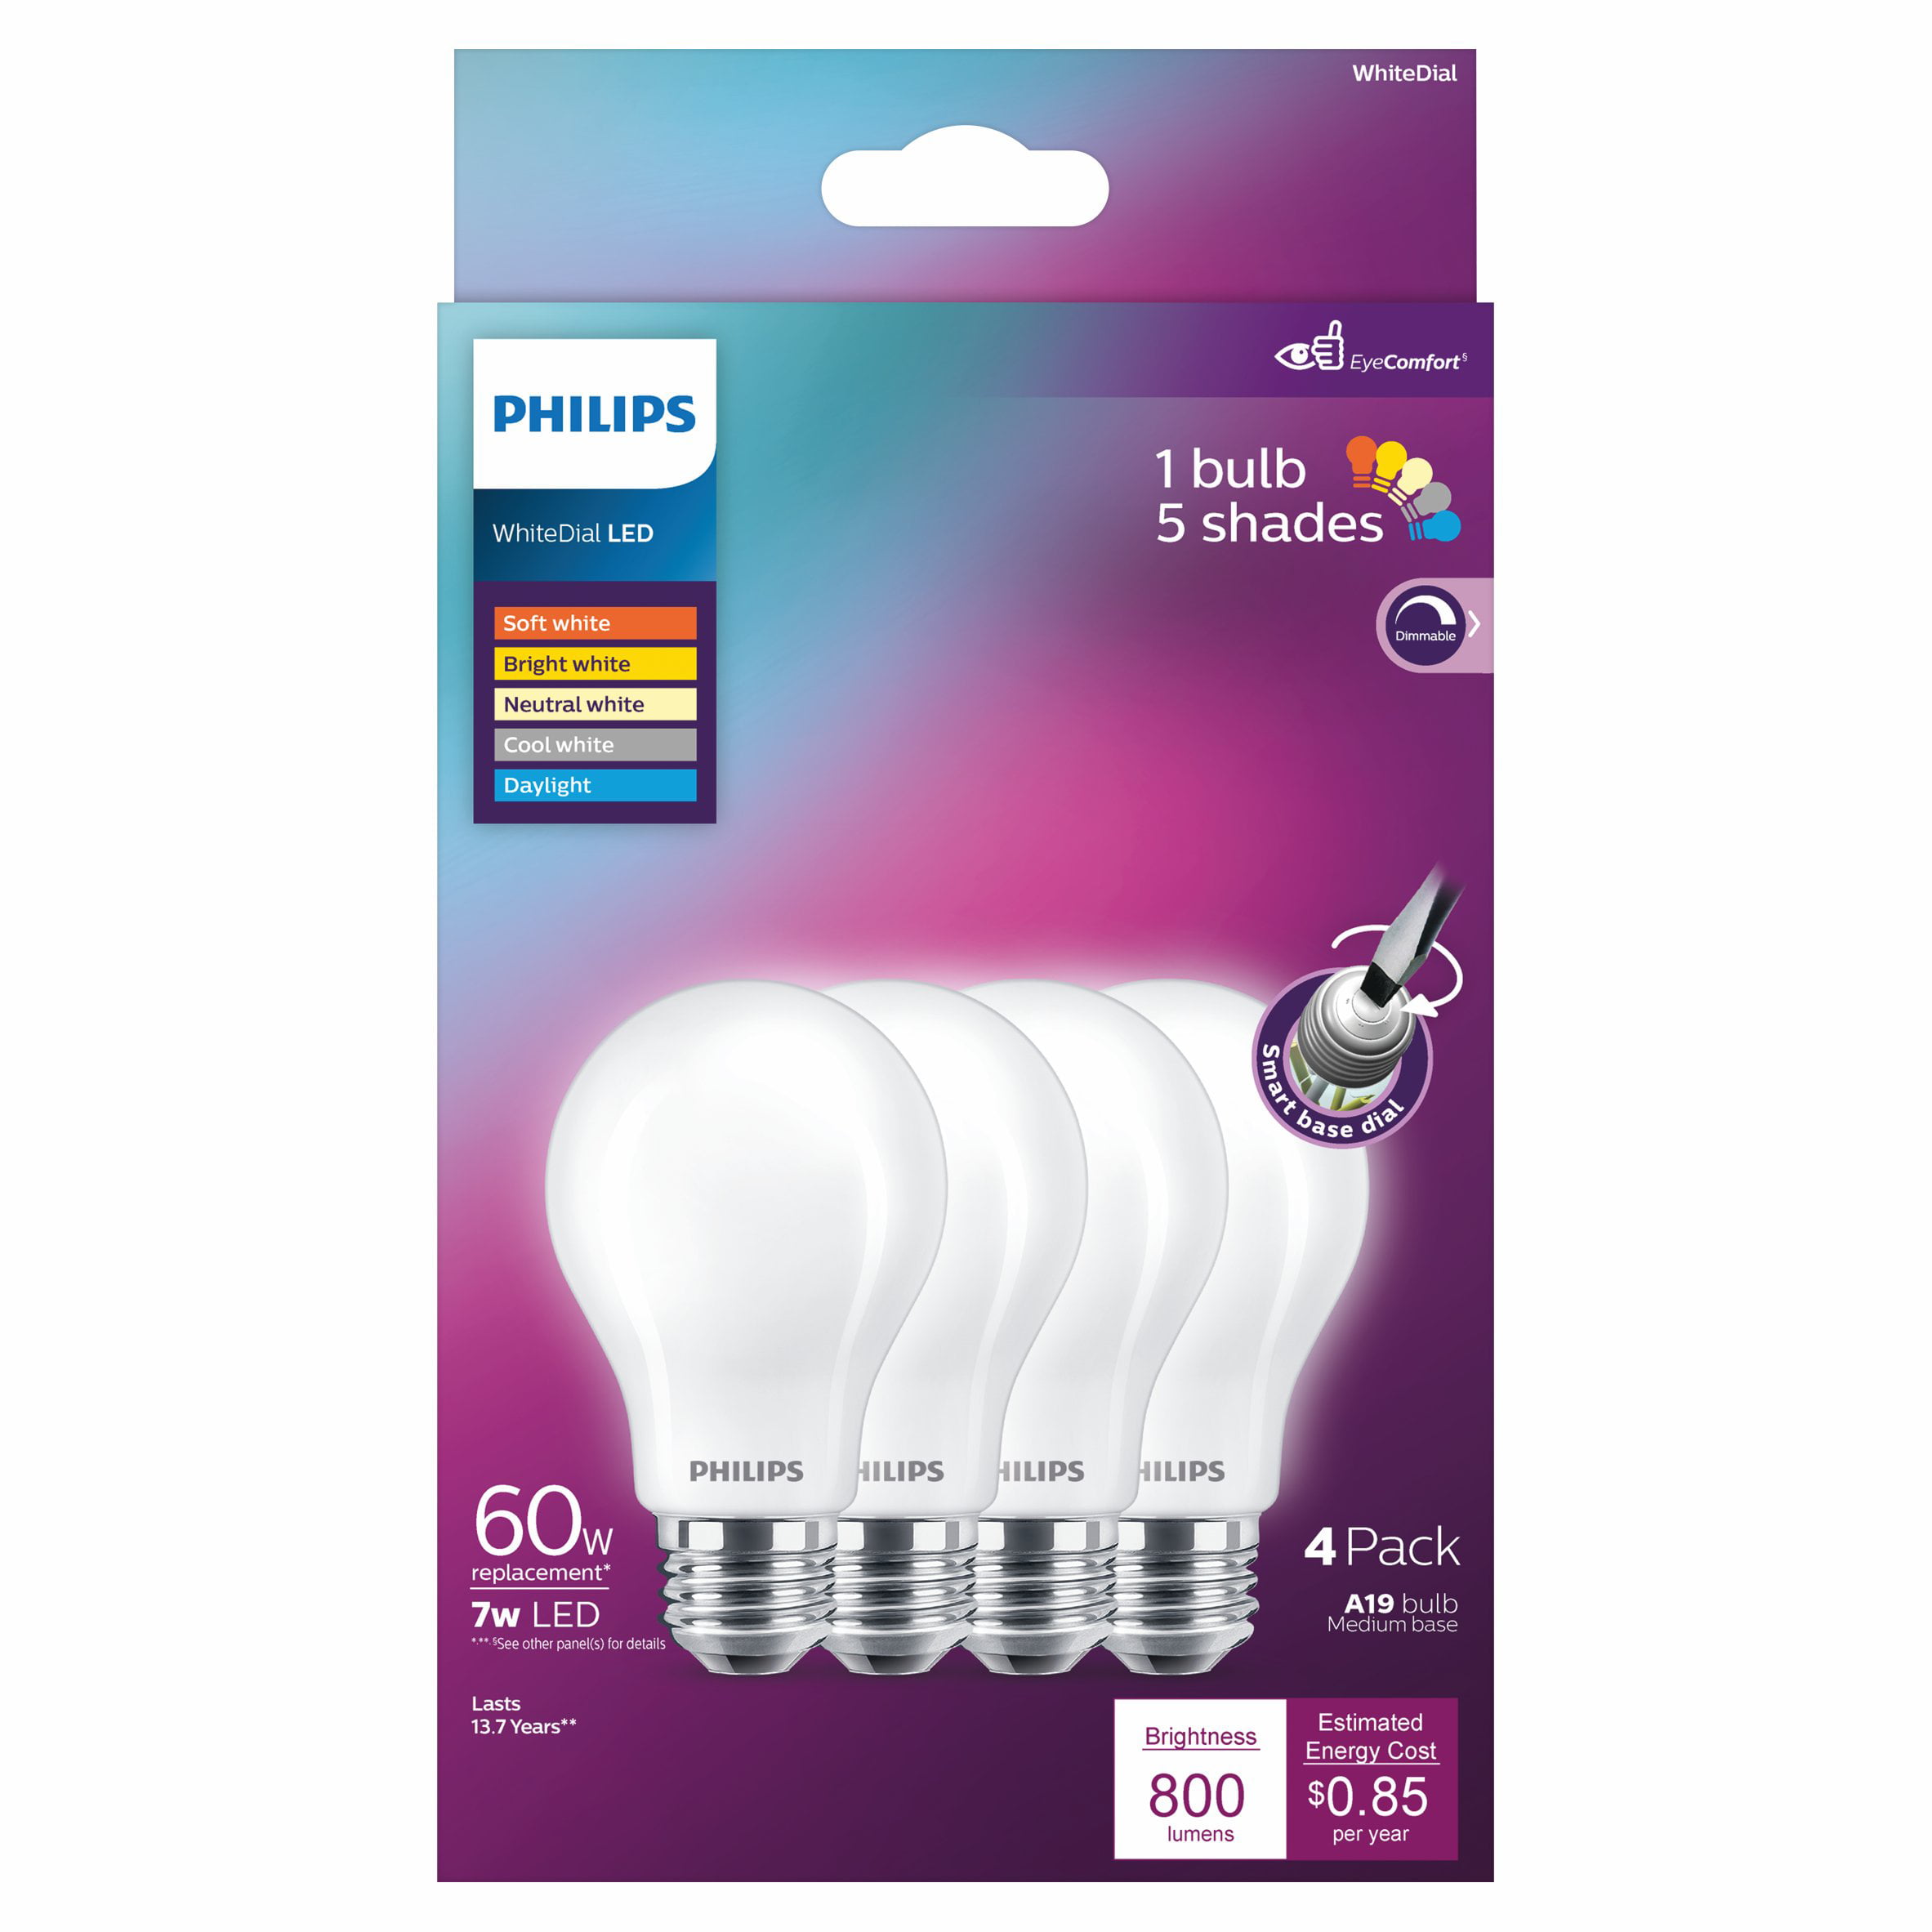 LED Light Base - Light Emitting Diode Light Base Latest Price,  Manufacturers & Suppliers